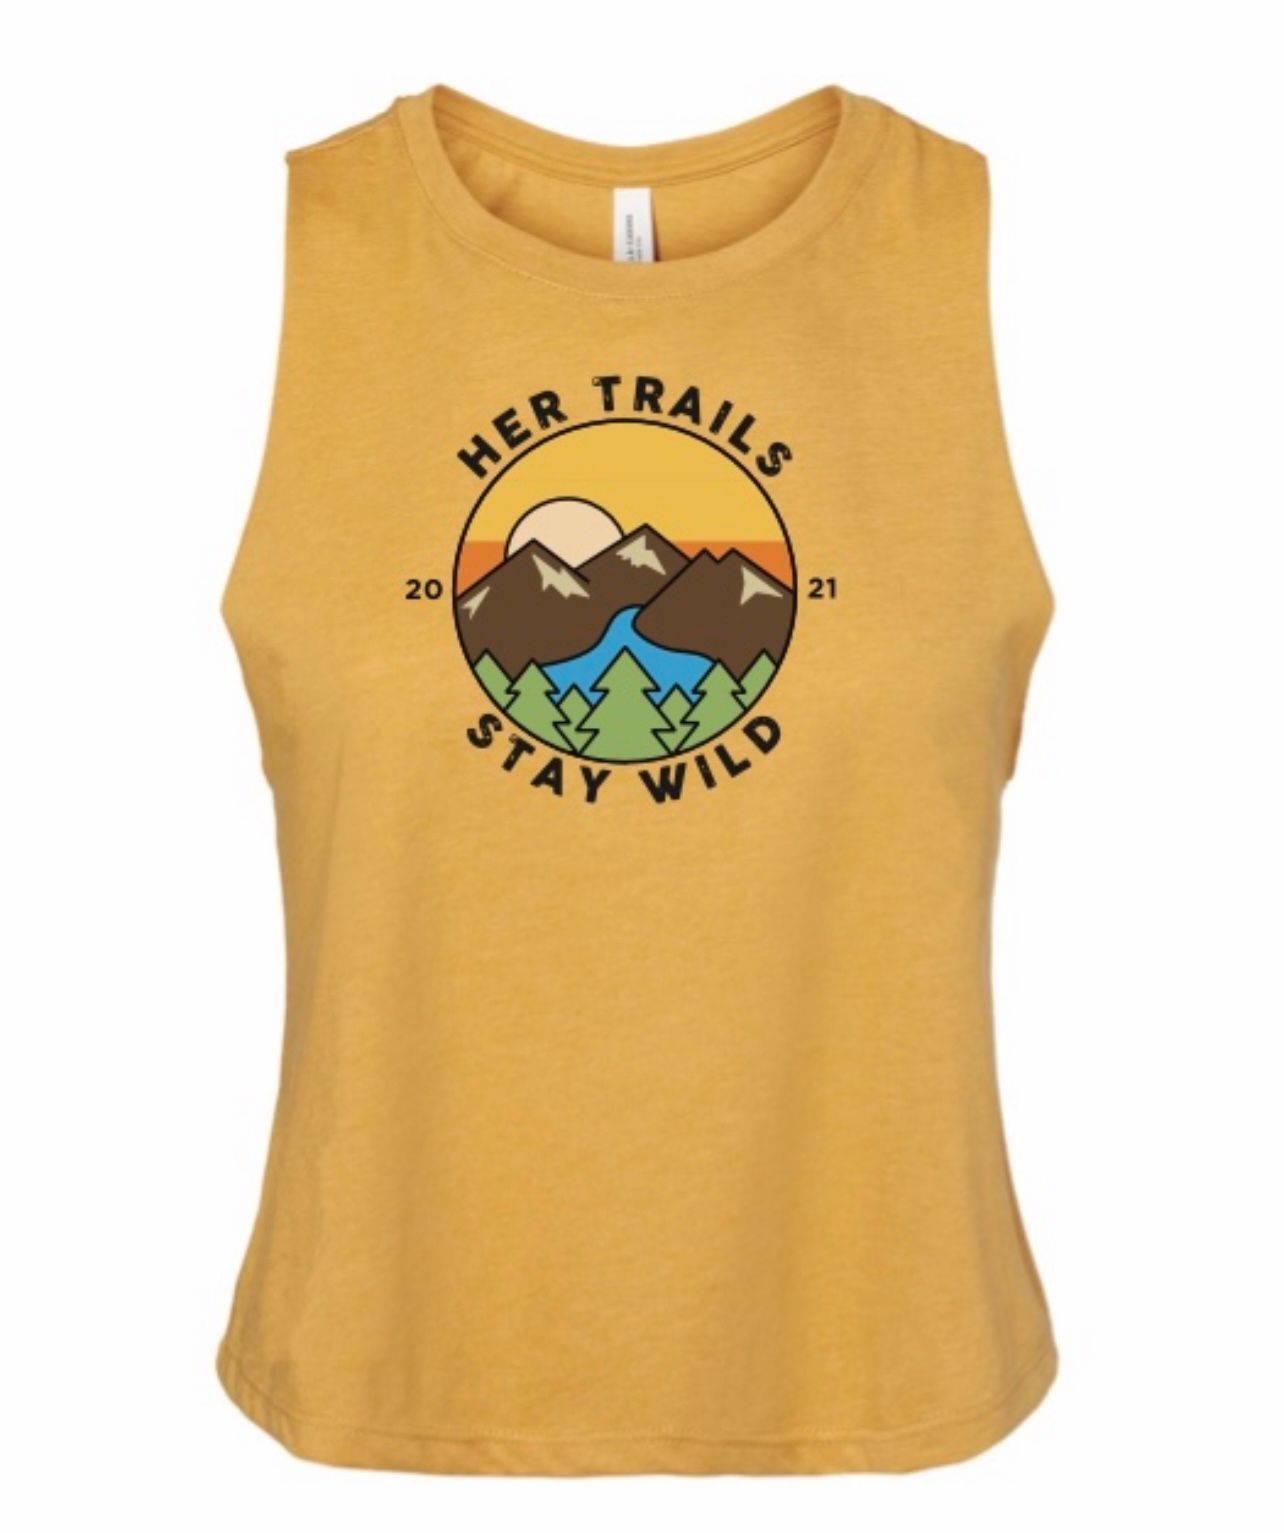 Her Trails Mustard Tank - 'stay wild'